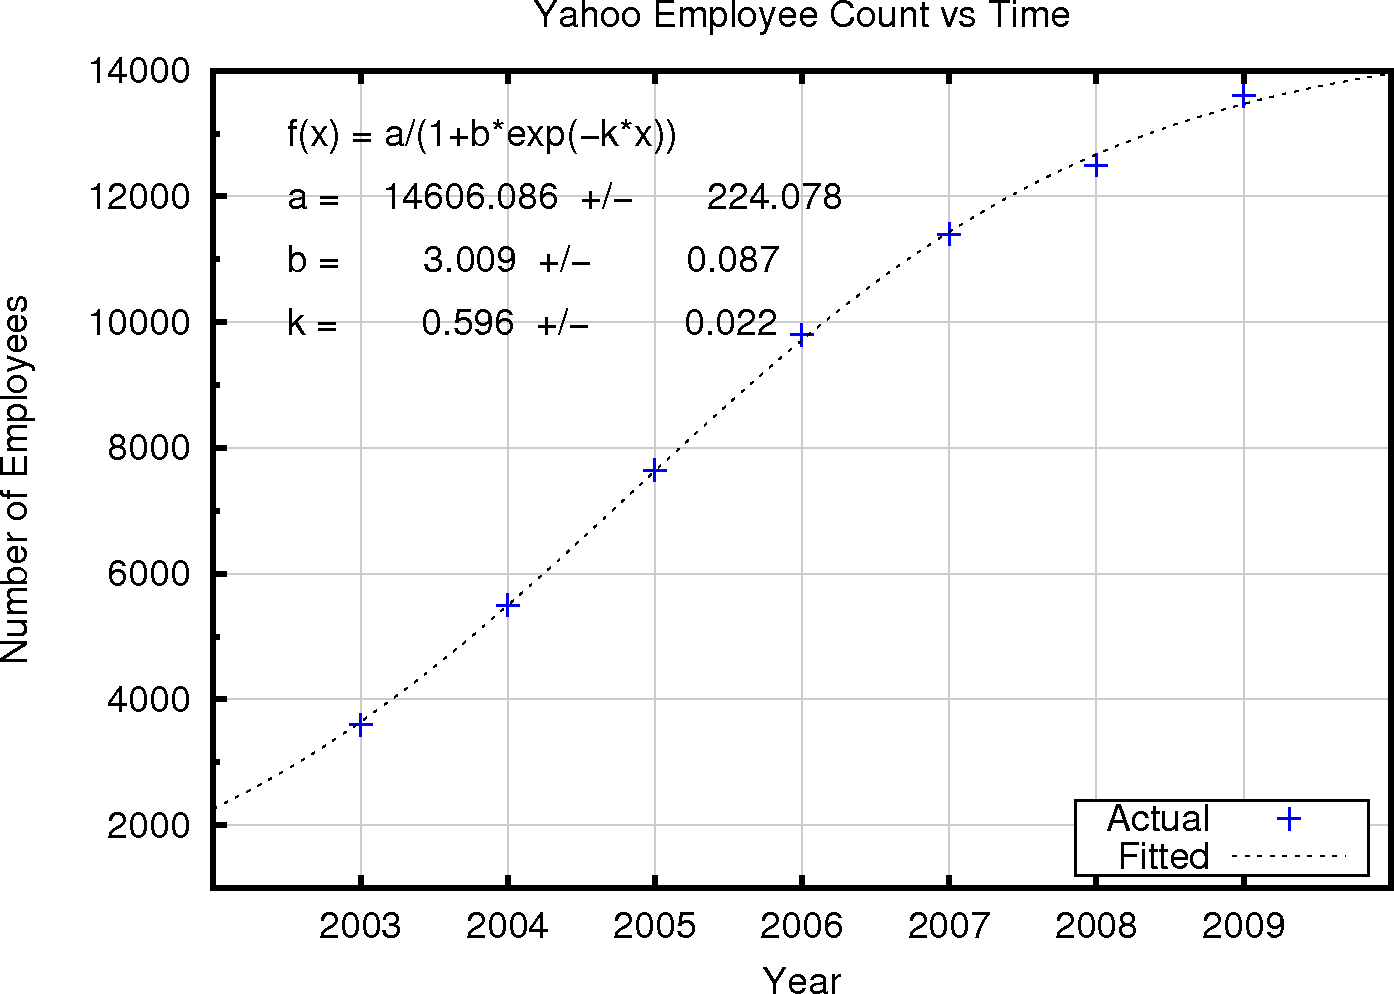 Yahoo Employee Count vs Time